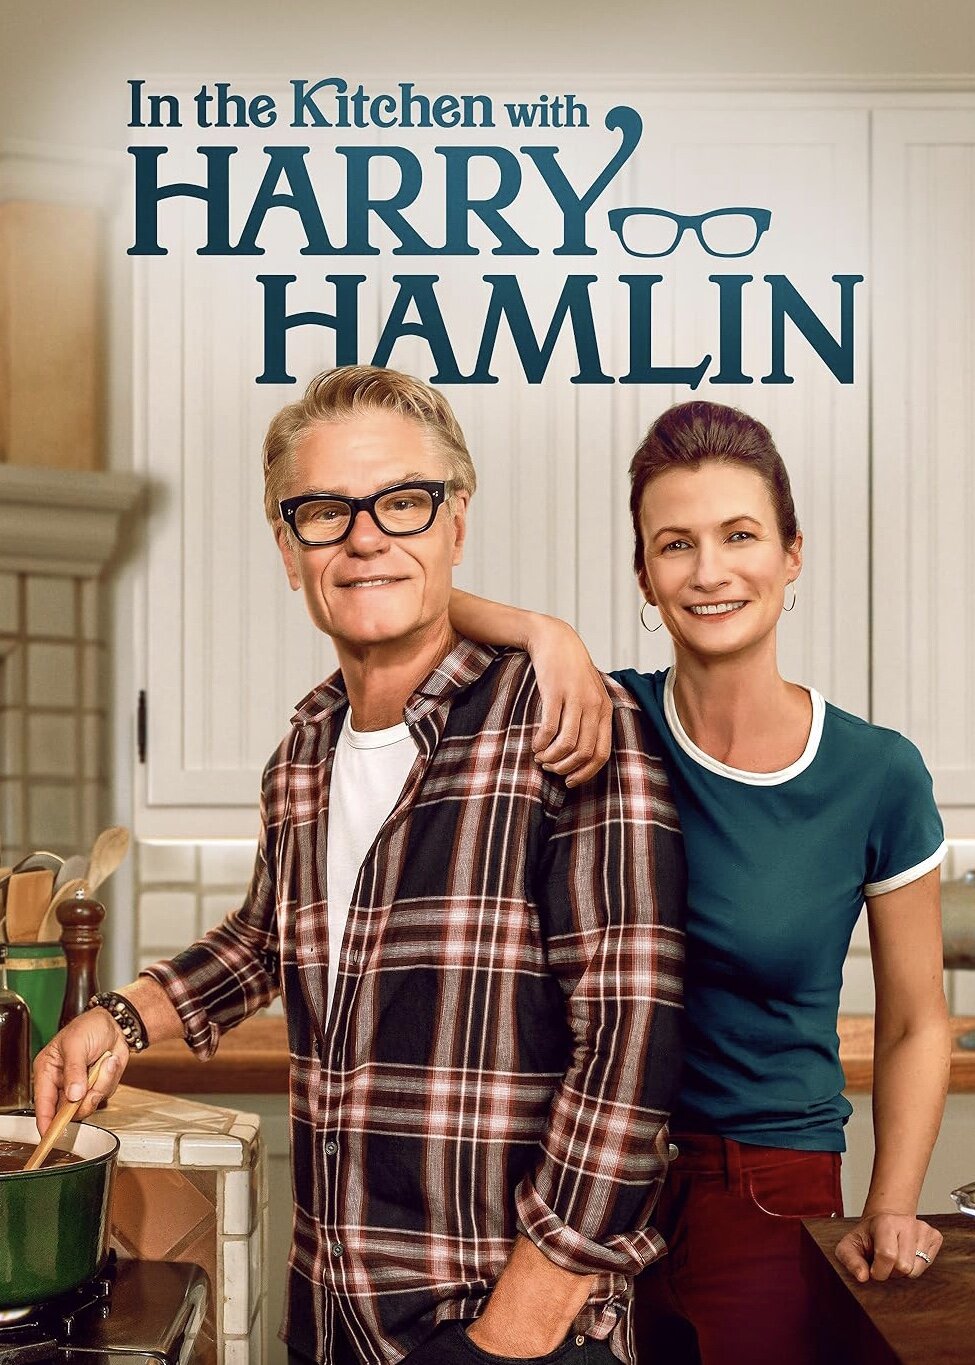 In the Kitchen with Harry Hamlin ne zaman